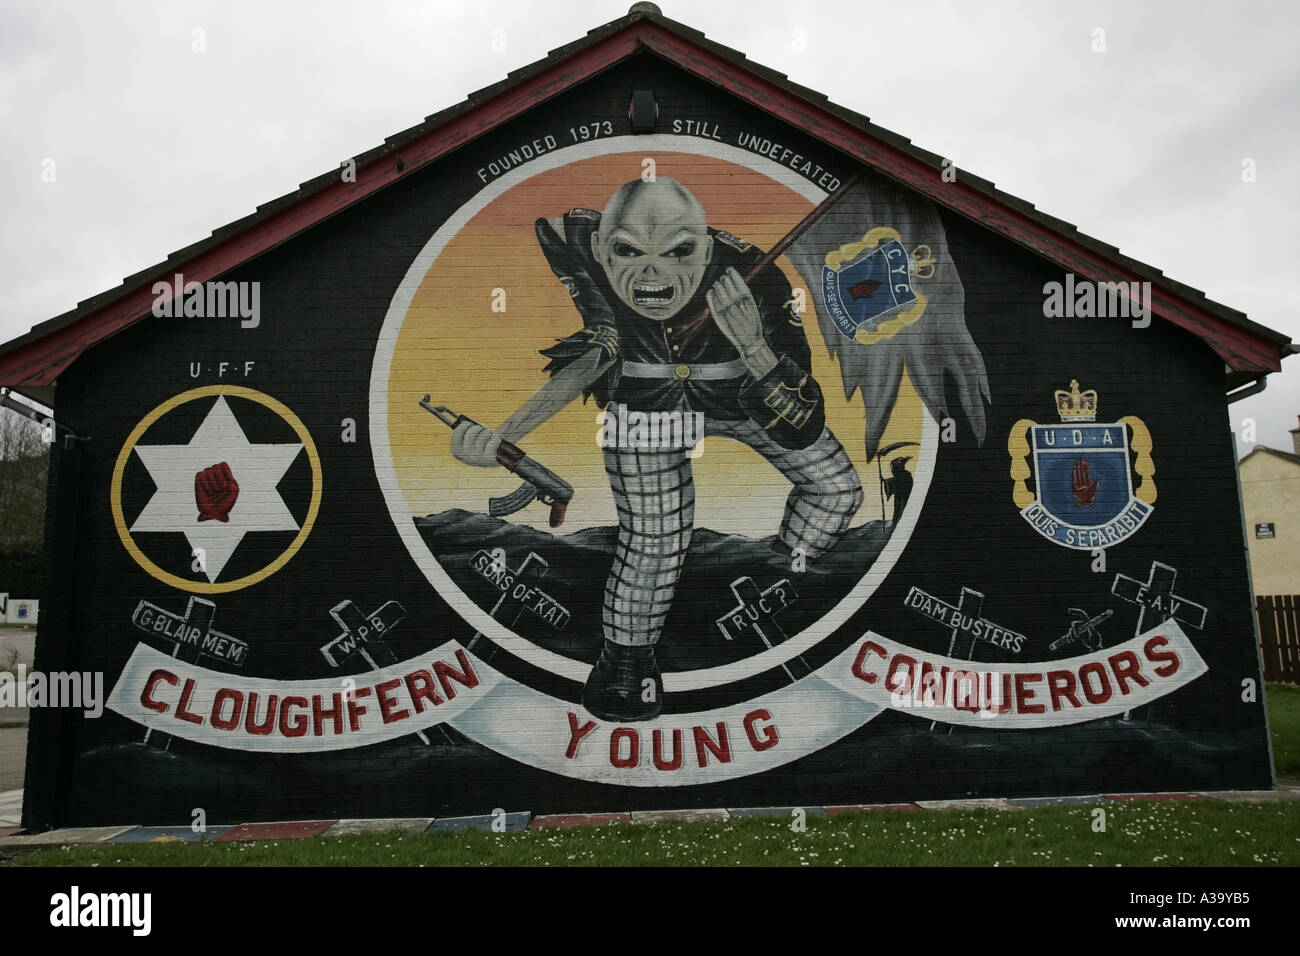 Cloughfern conquistatori giovani lealisti carta murale UFF UDA newtownabbey County Antrim Irlanda del Nord Foto Stock